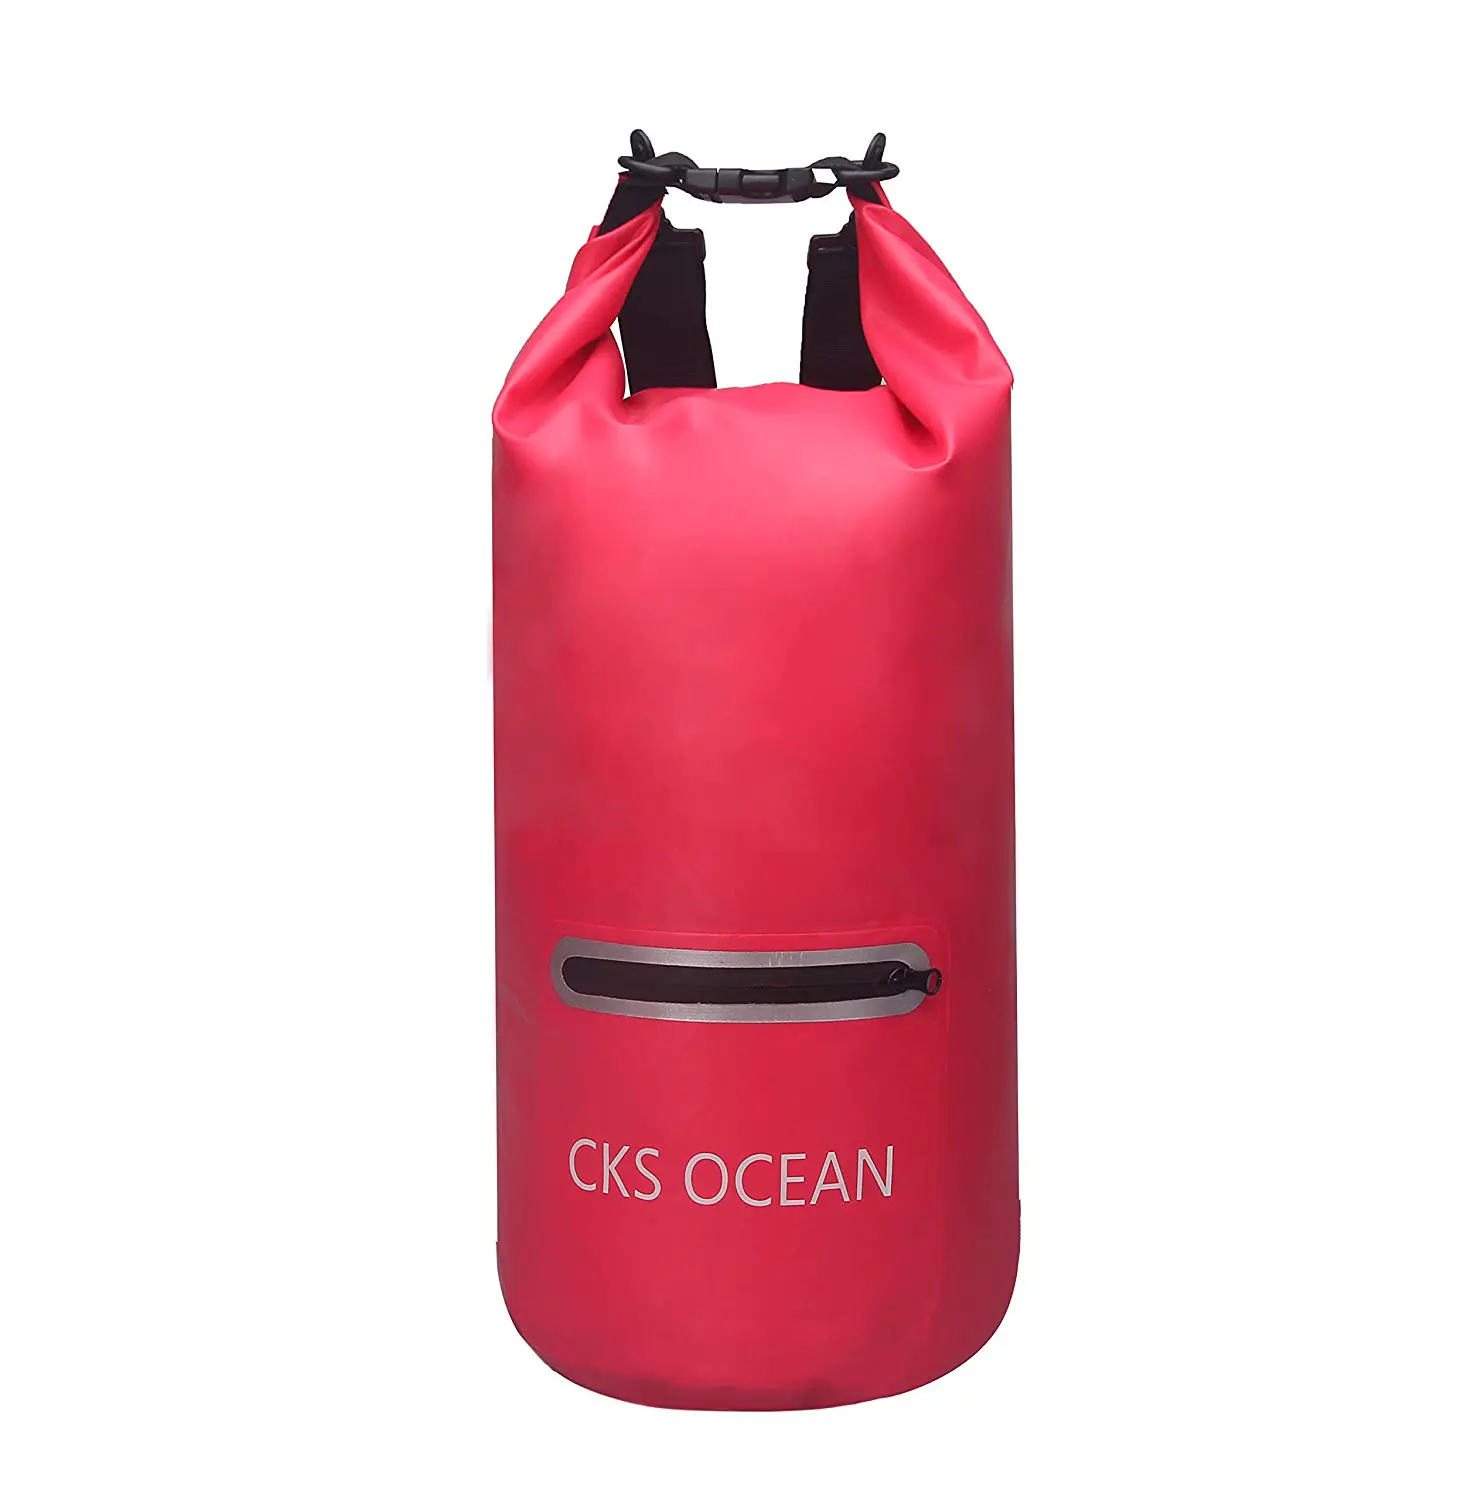 Prosperity drybag with innovative transparent window design open water swim buoy flotation device